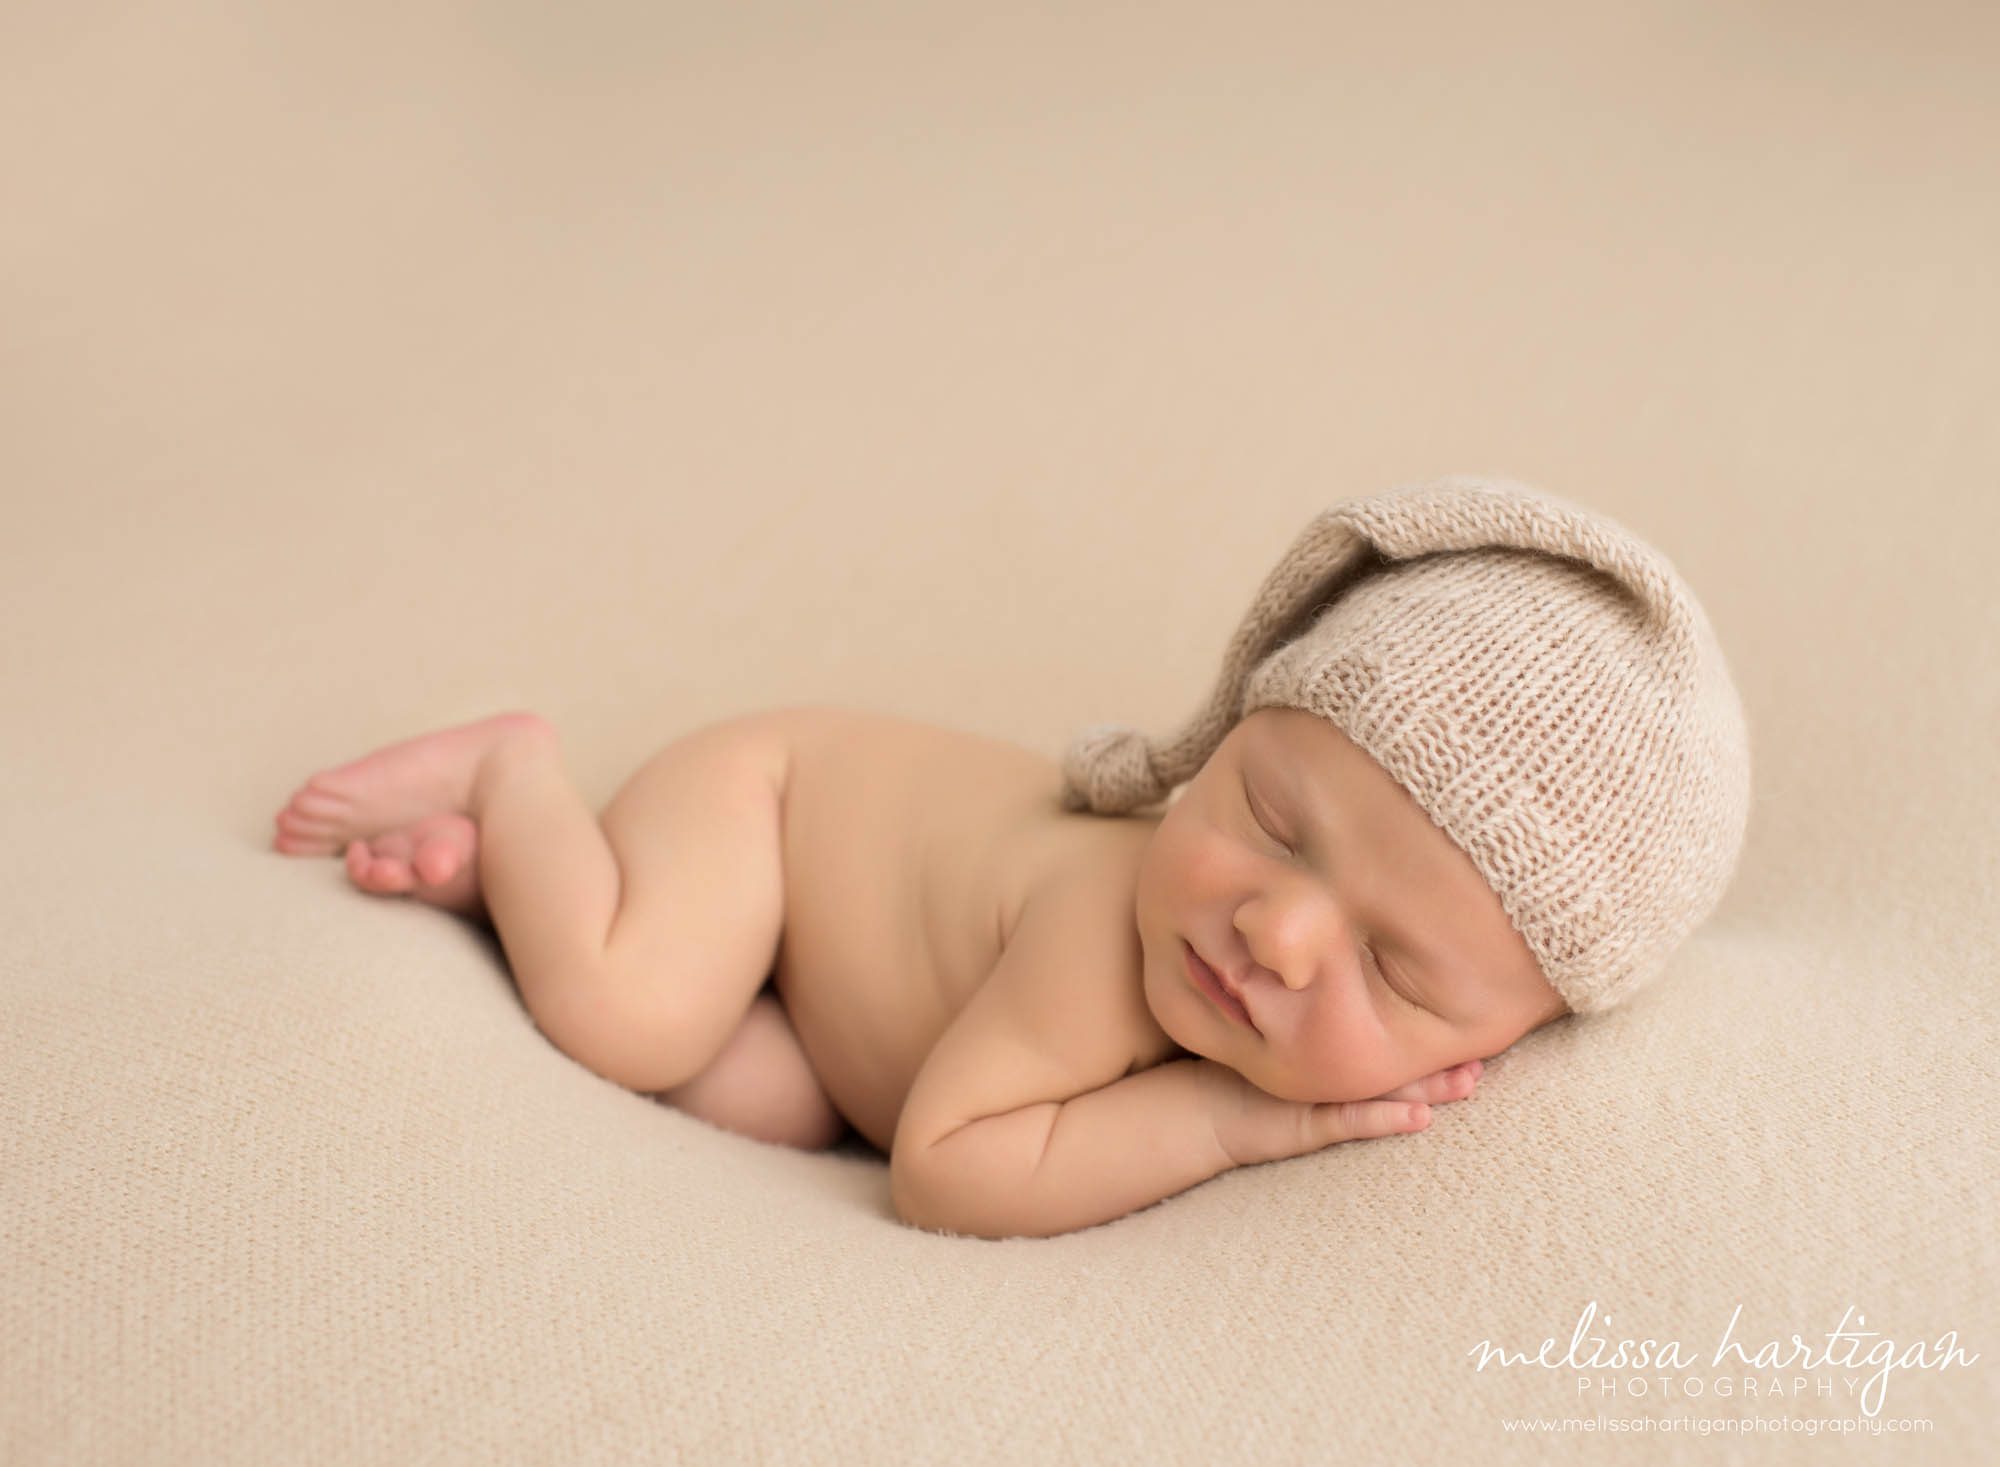 baby boy sleeping on side wearing knitted neutral colored sleepy cap